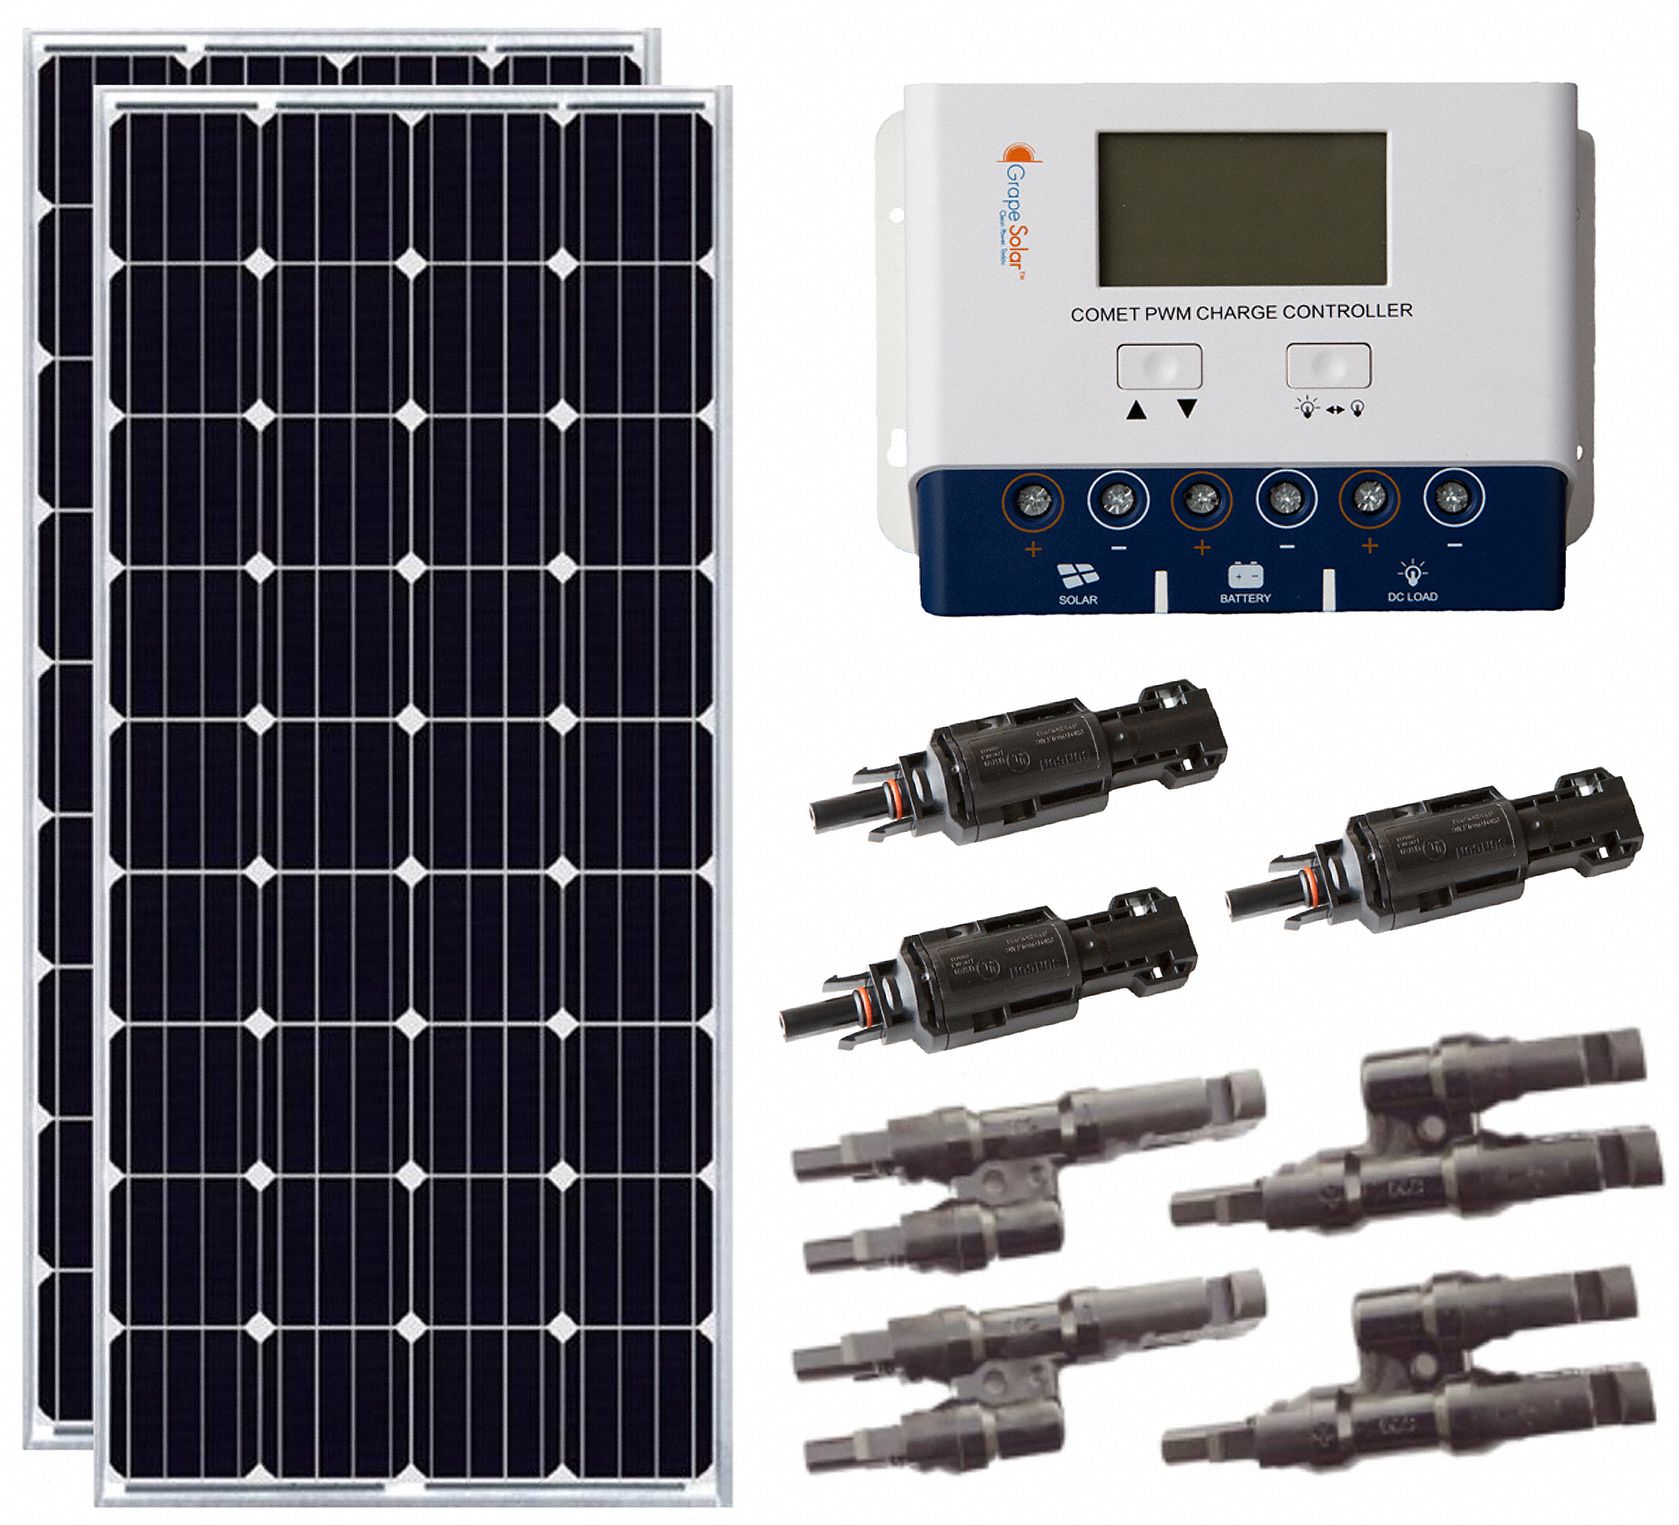 Solar Panel Kit: 400 W Nominal Output Power, 12V DC, 2 Solar Panels, 20.3V DC